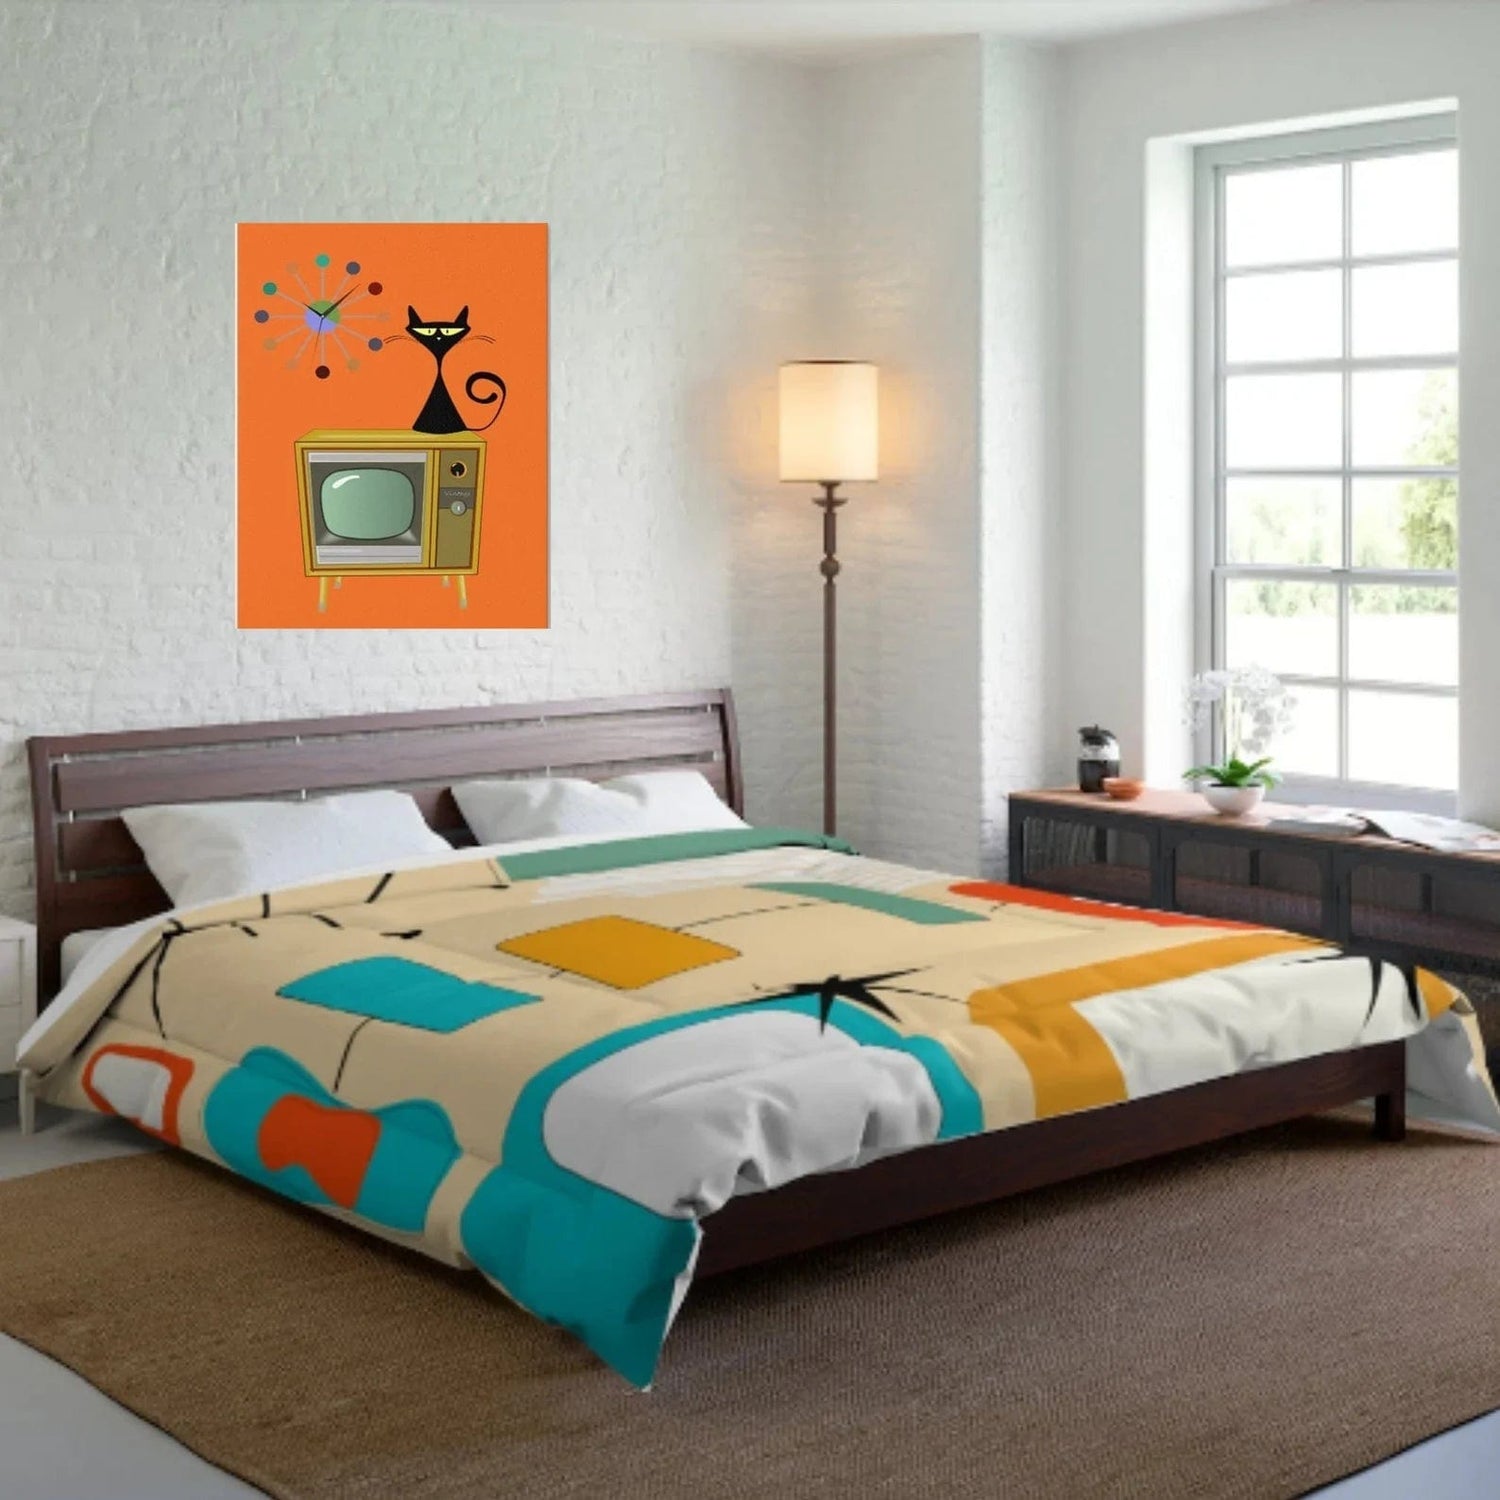 Mid Century Design Bedding, Beige, Aqua Blue, Yellow, Geometric Abstract Art, Mid Mod King Or Queen Comforter Home Decor